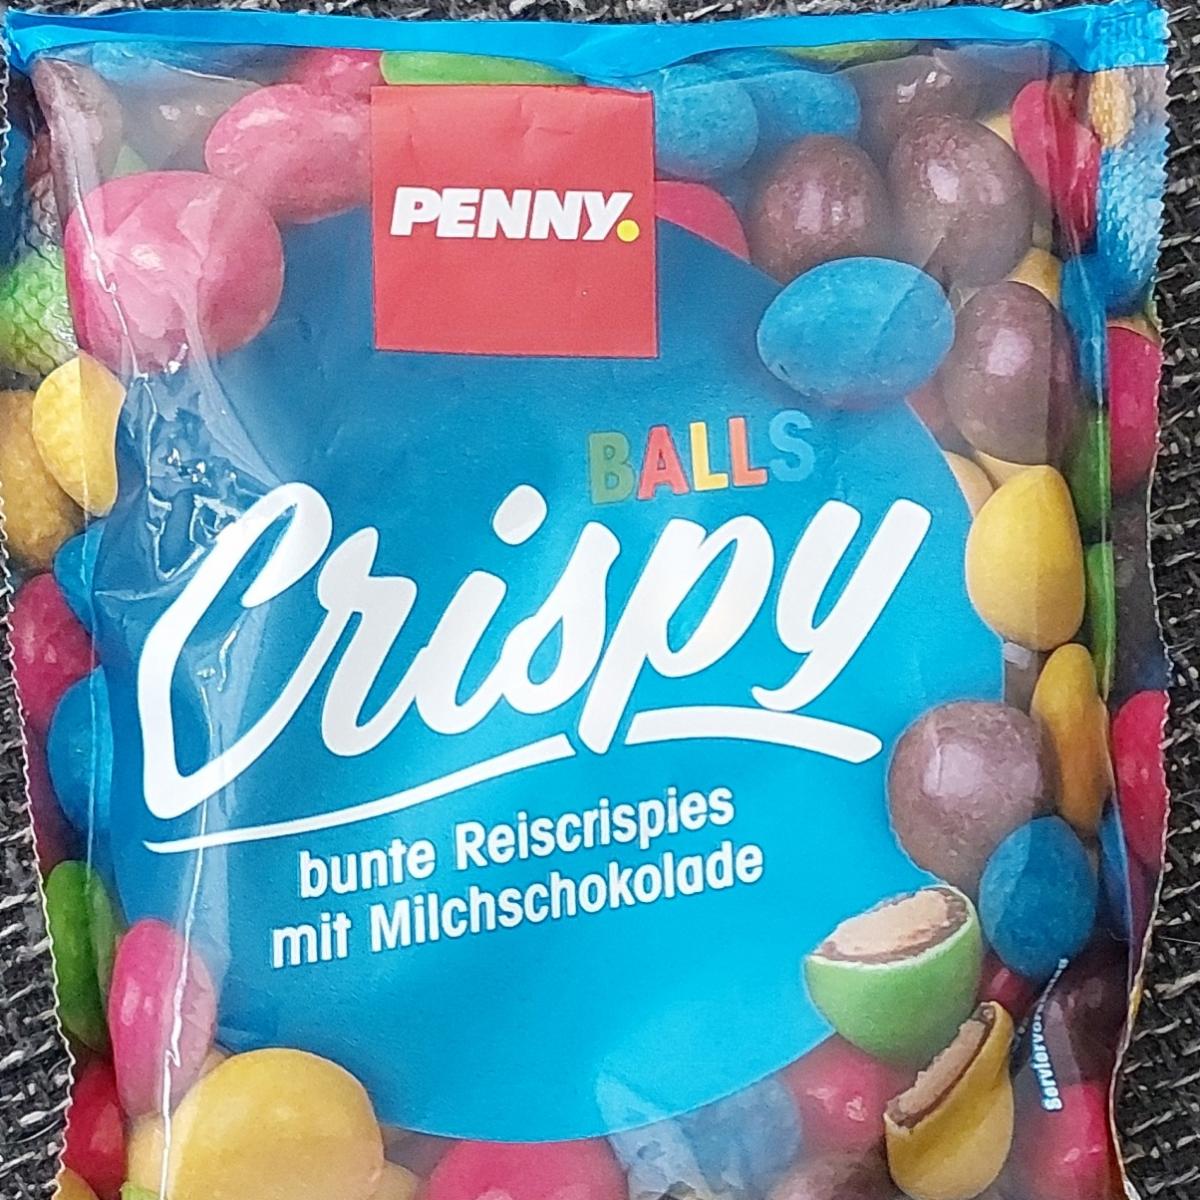 Fotografie - Crispy balls bunte Reiscrispies mit Milchschokolade Penny